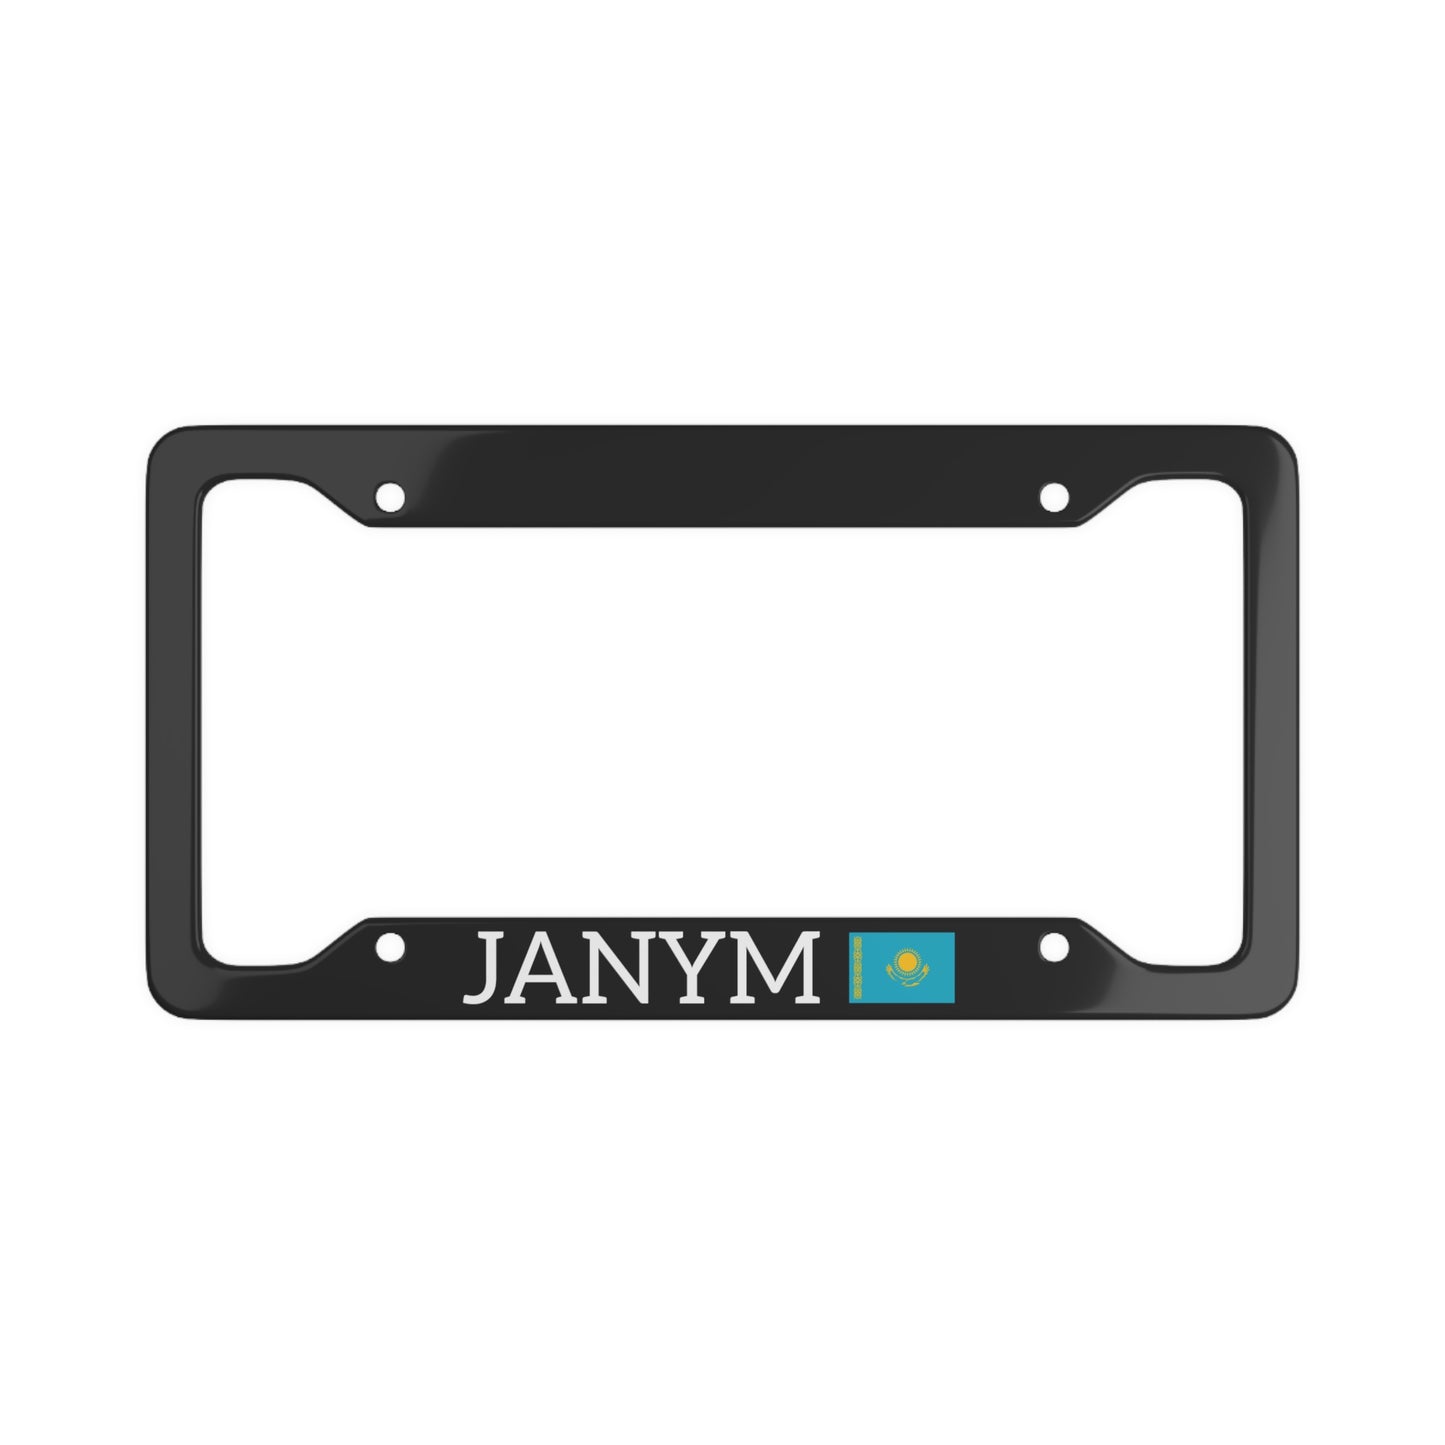 JANYM with flag License Plate Frame